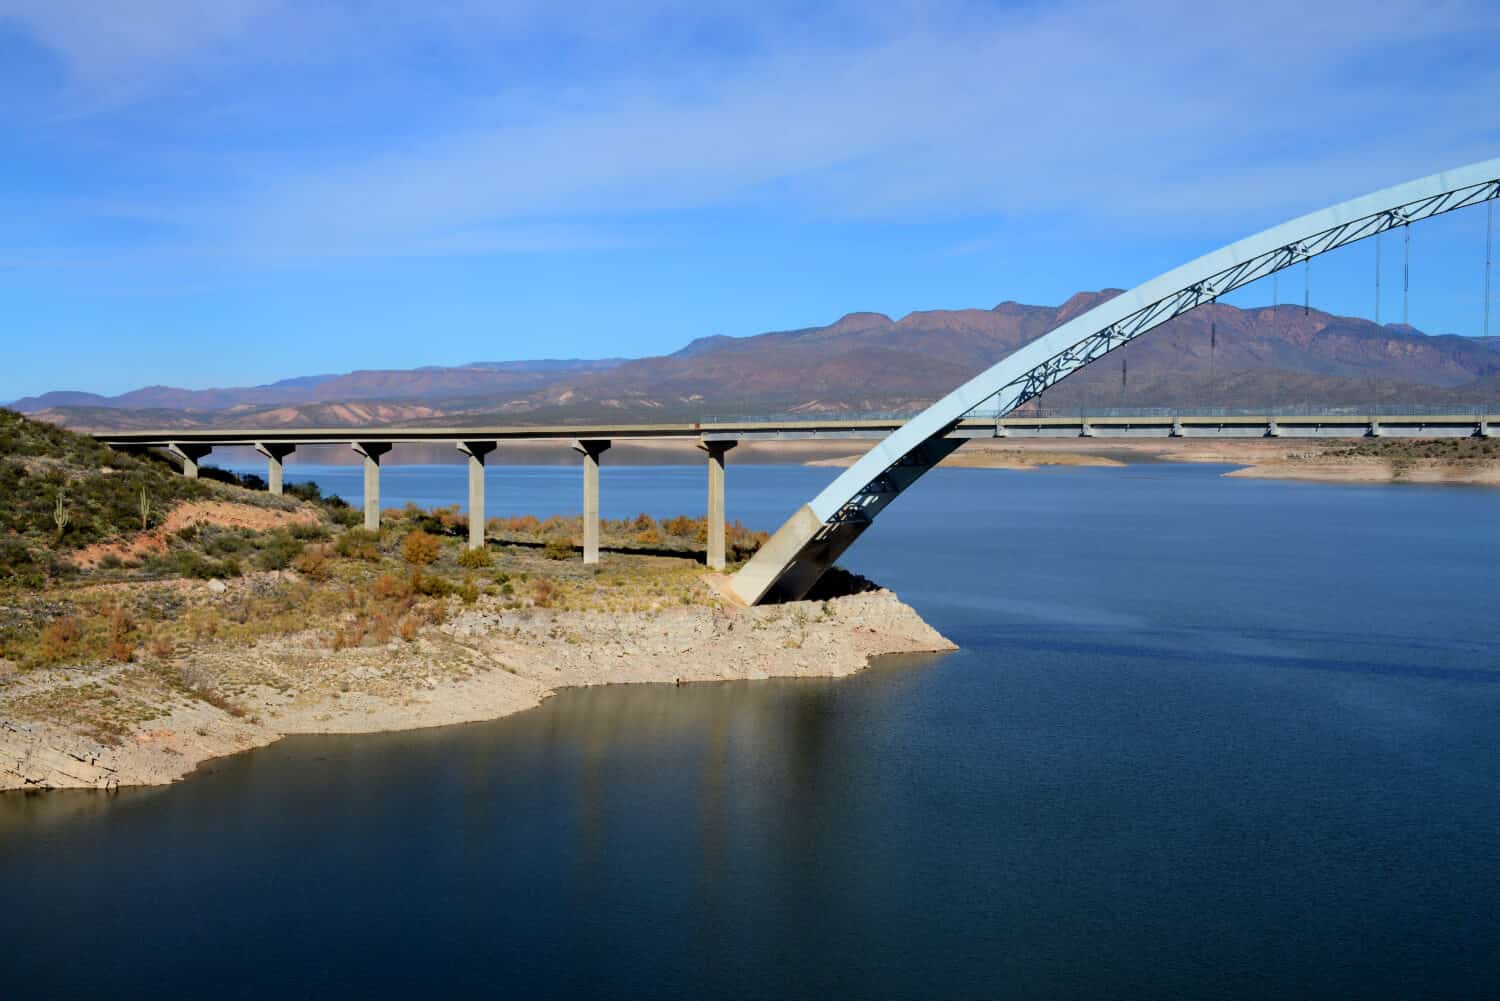 Roosevelt Bridge and Roosevelt lake in southeast Arizona